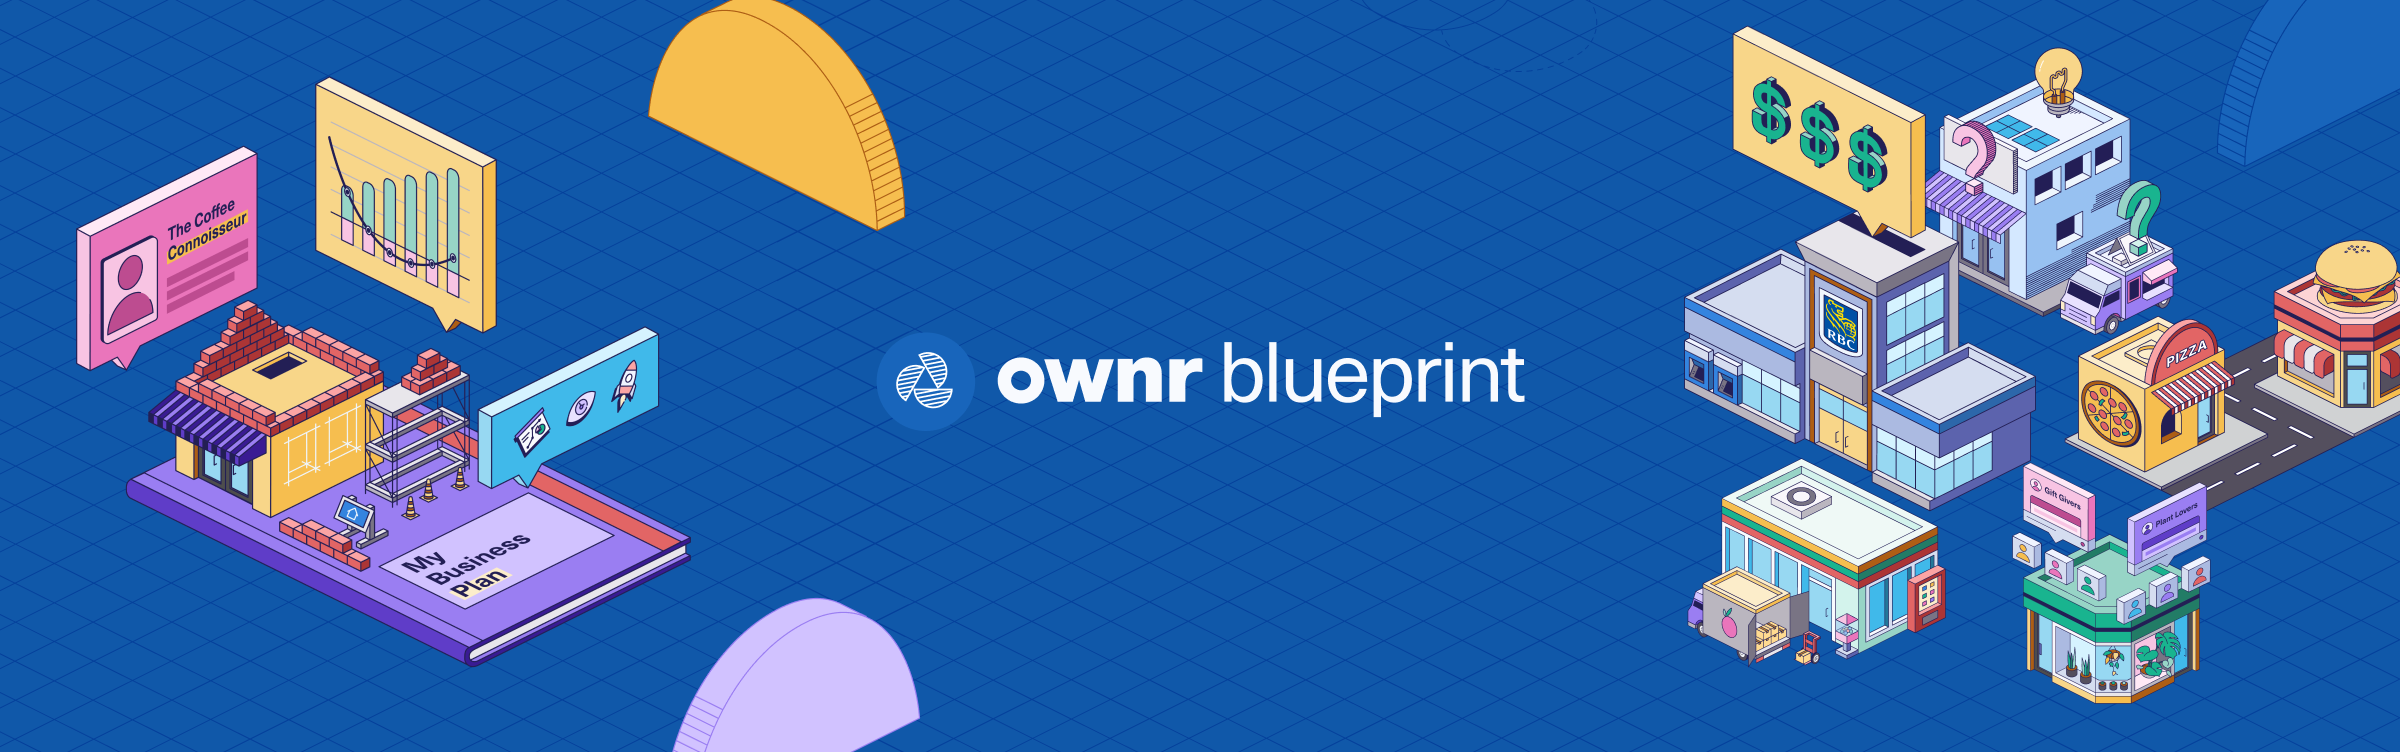 Ownr Blueprint announcement